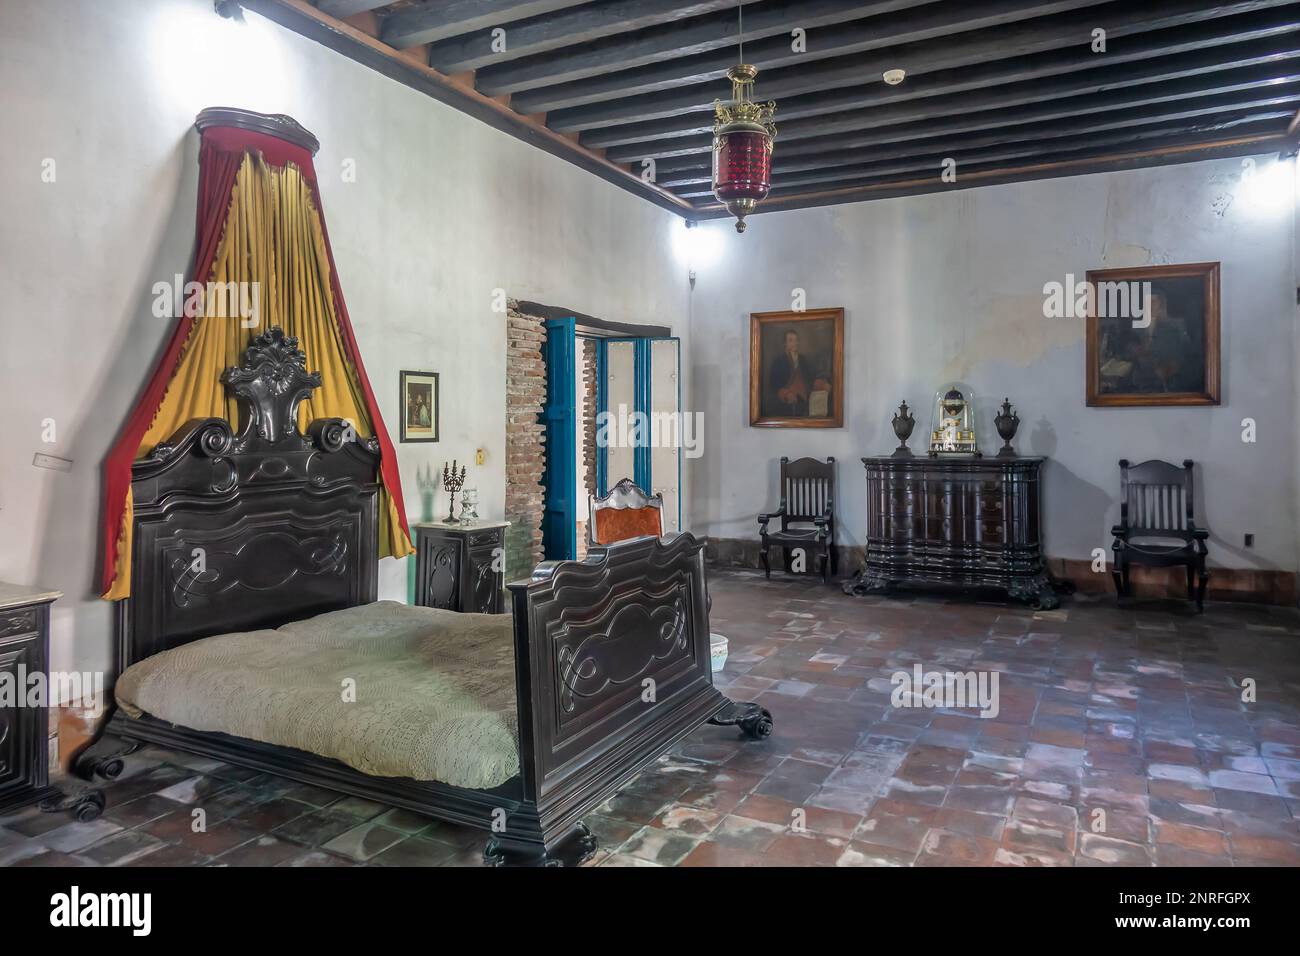 Caribbean, Cuba, Santiago, Parque Cespedes, Diego Velazquez house, interior, bedroom Stock Photo